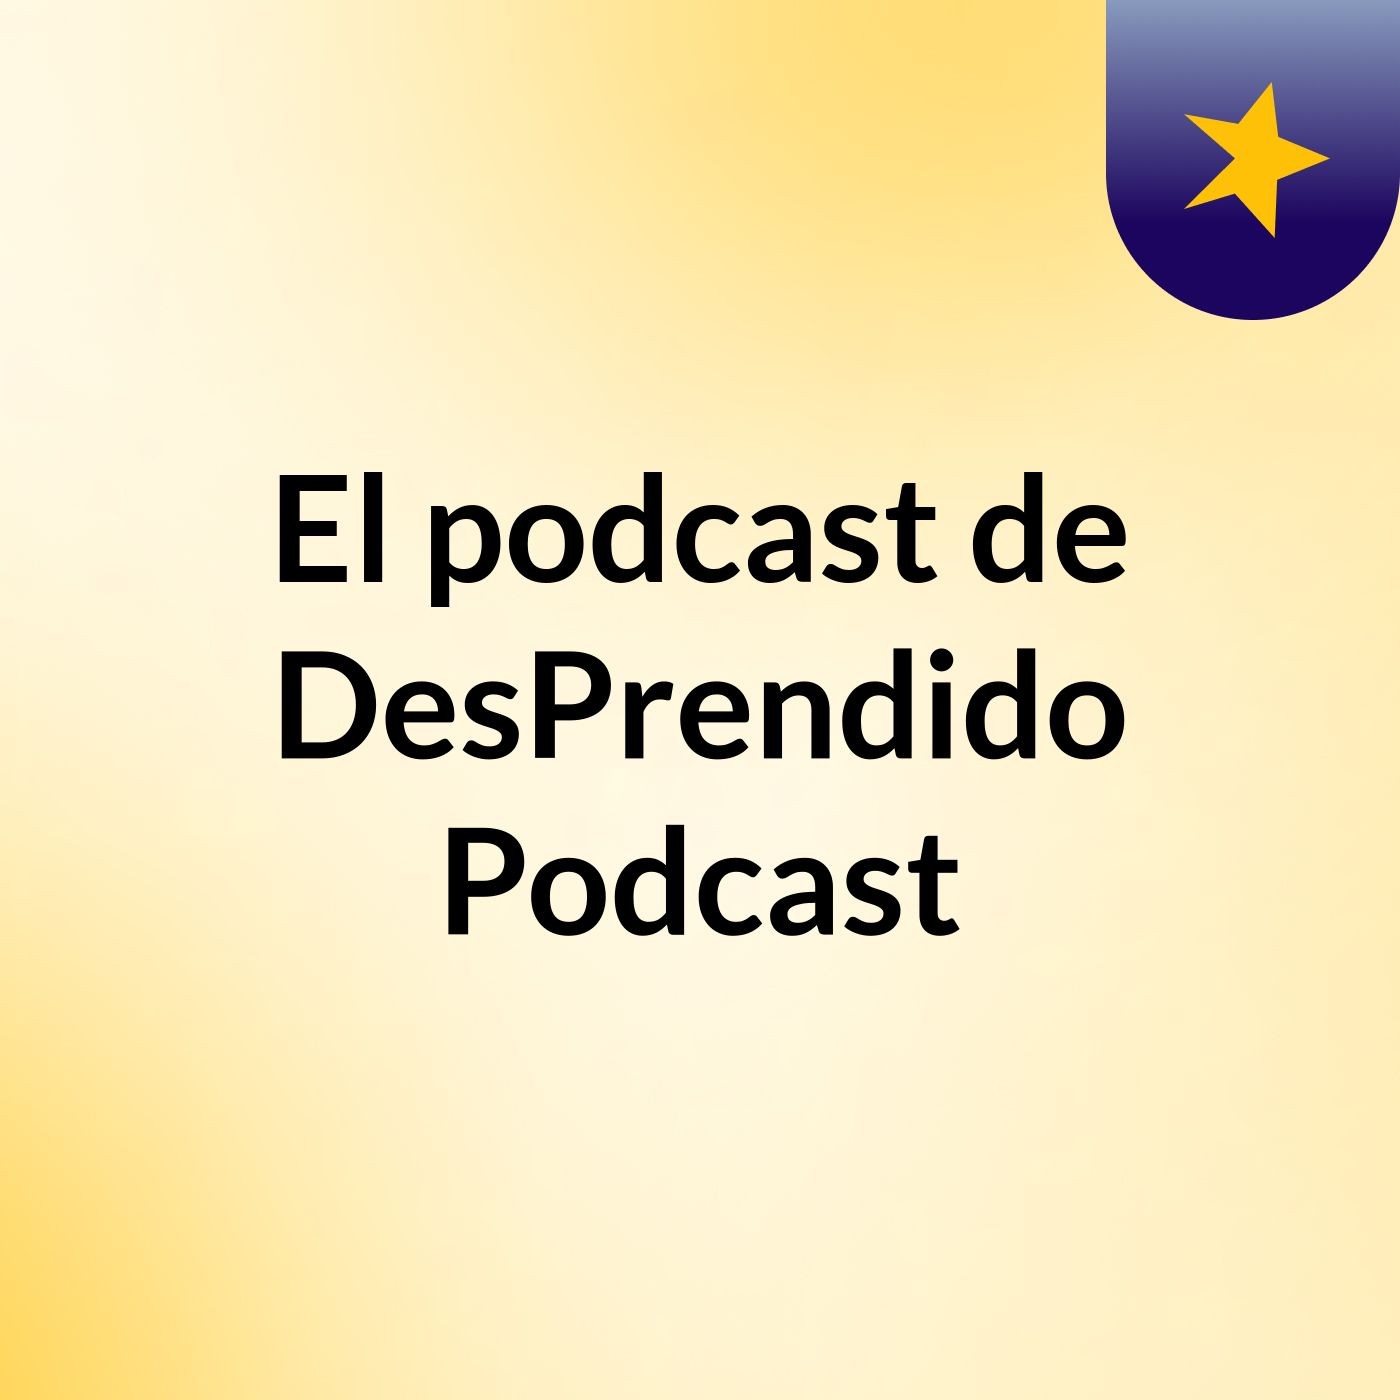 El podcast de DesPrendido Podcast